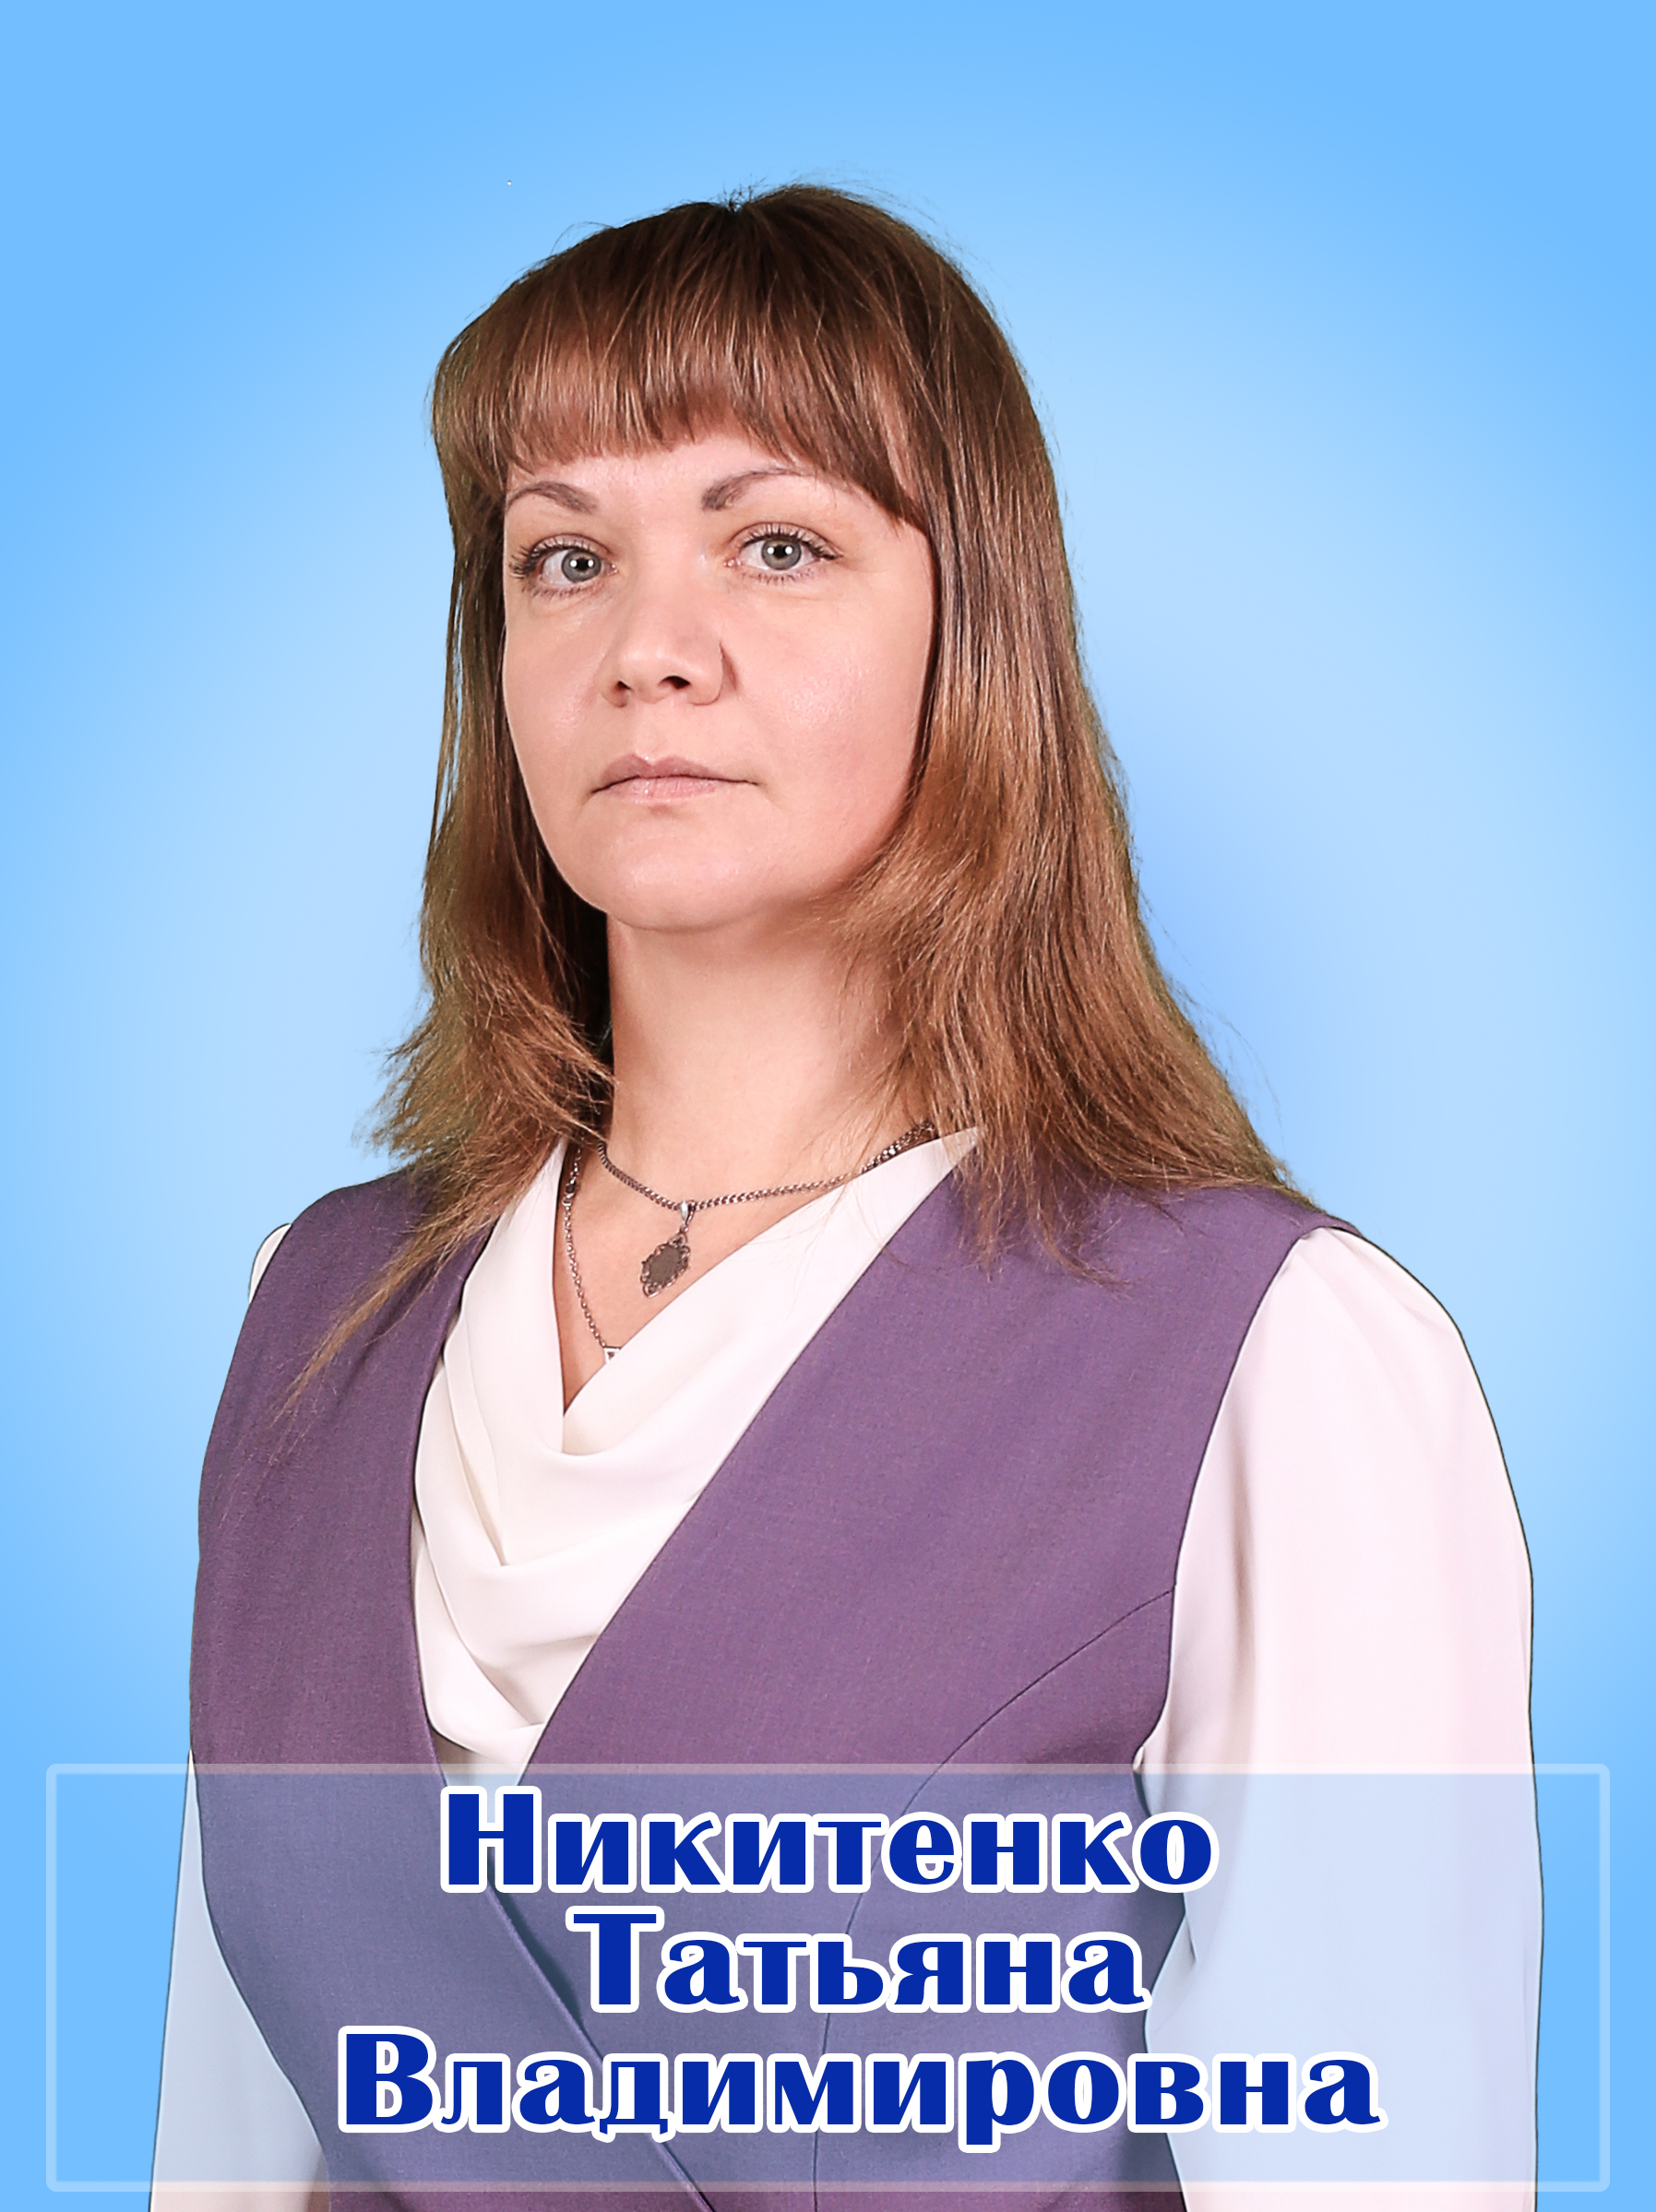 Никитенко Татьяна Владимировна.